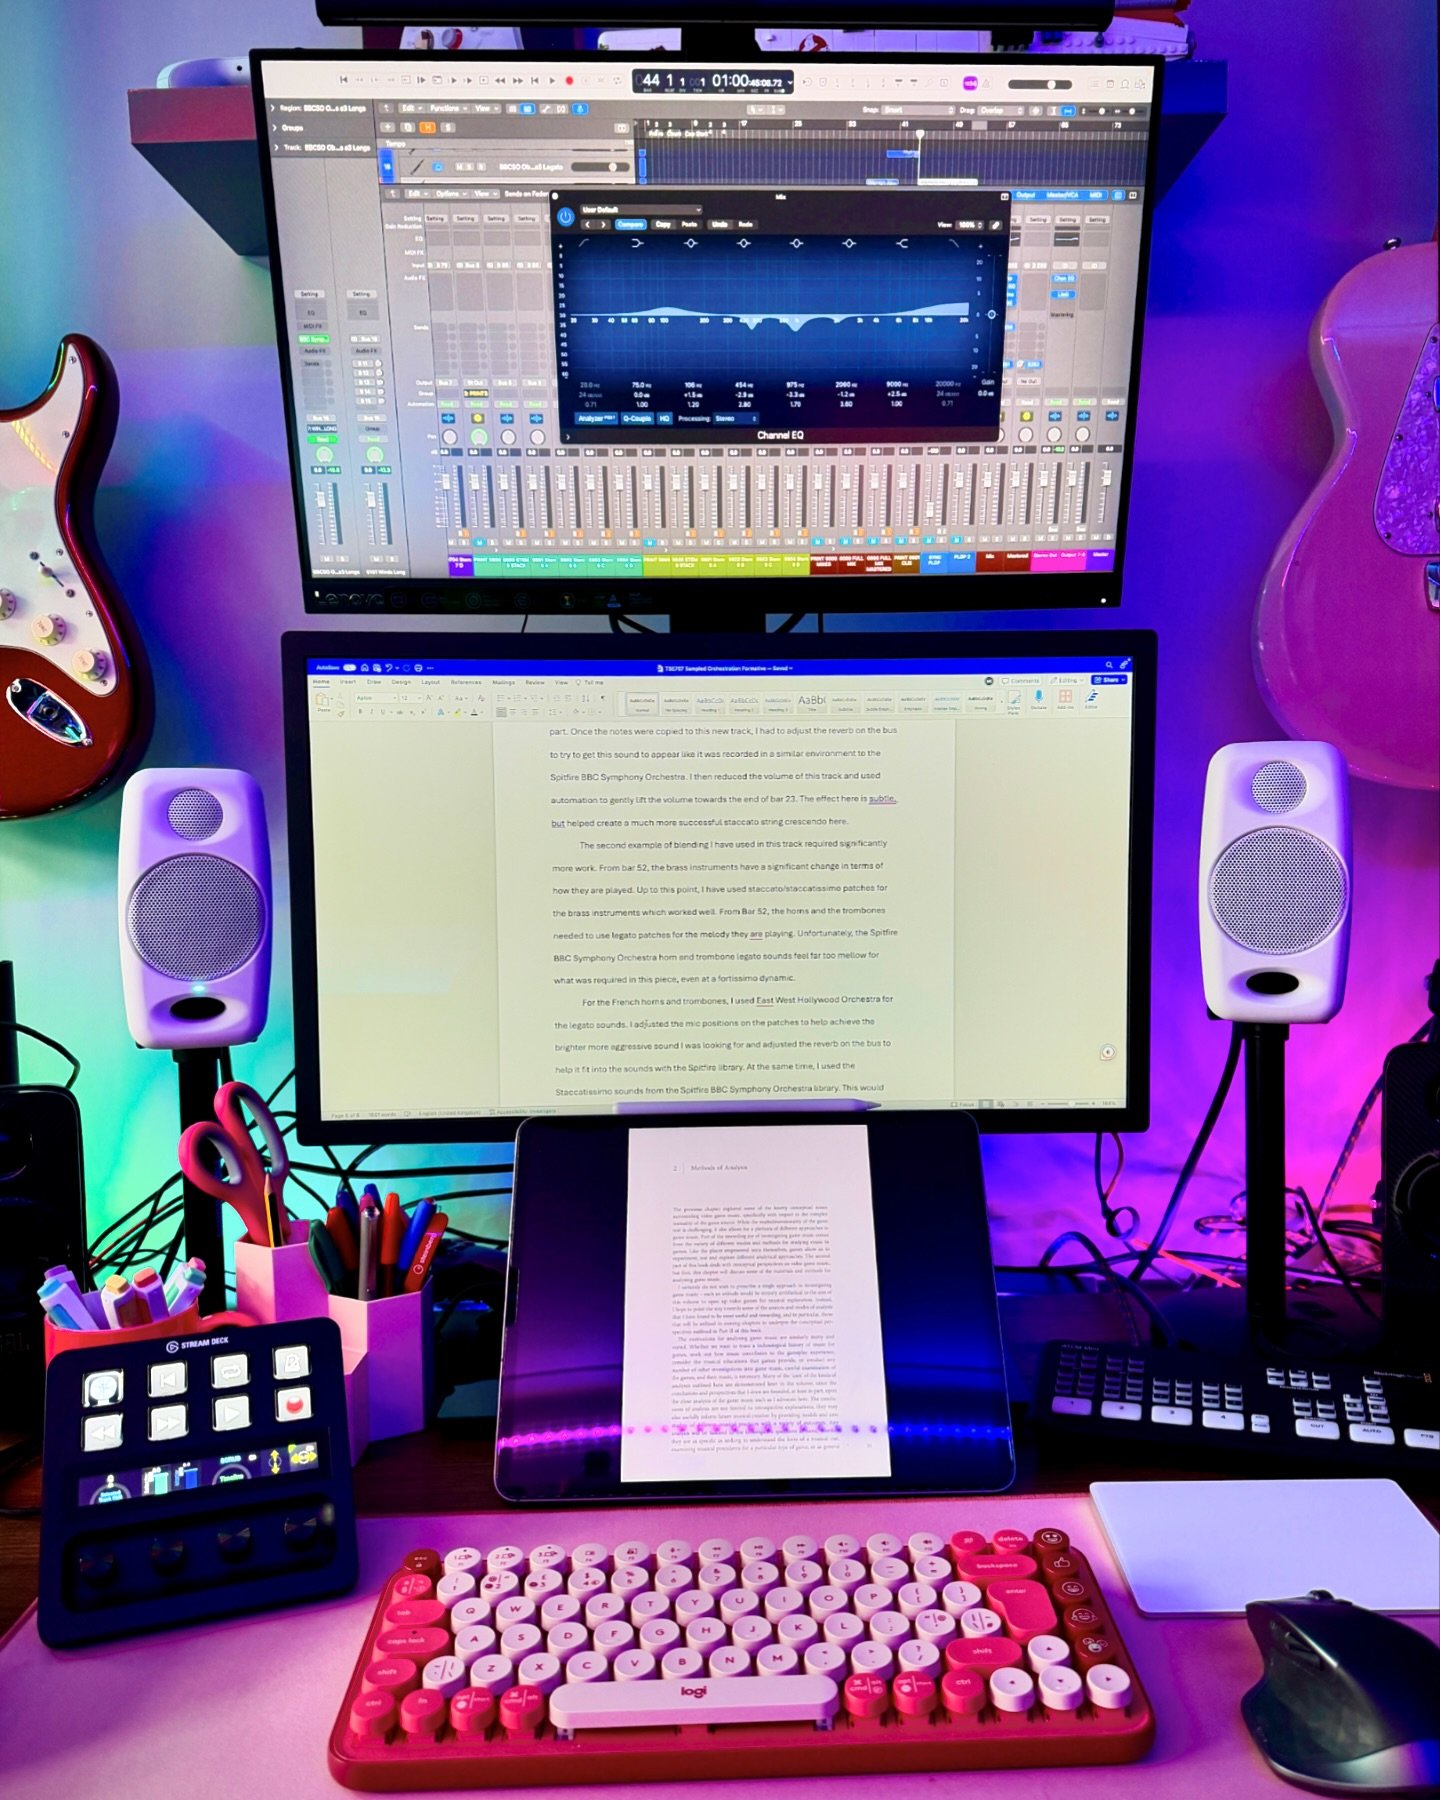 A day of essay writing 💪🏻 

#mac #macsetup #setup #desksetup #macbookpro #musicsetup #musicstudio #homestudio #setups #setupinspiration #setupgoals #tech #technology @thinkspace_education